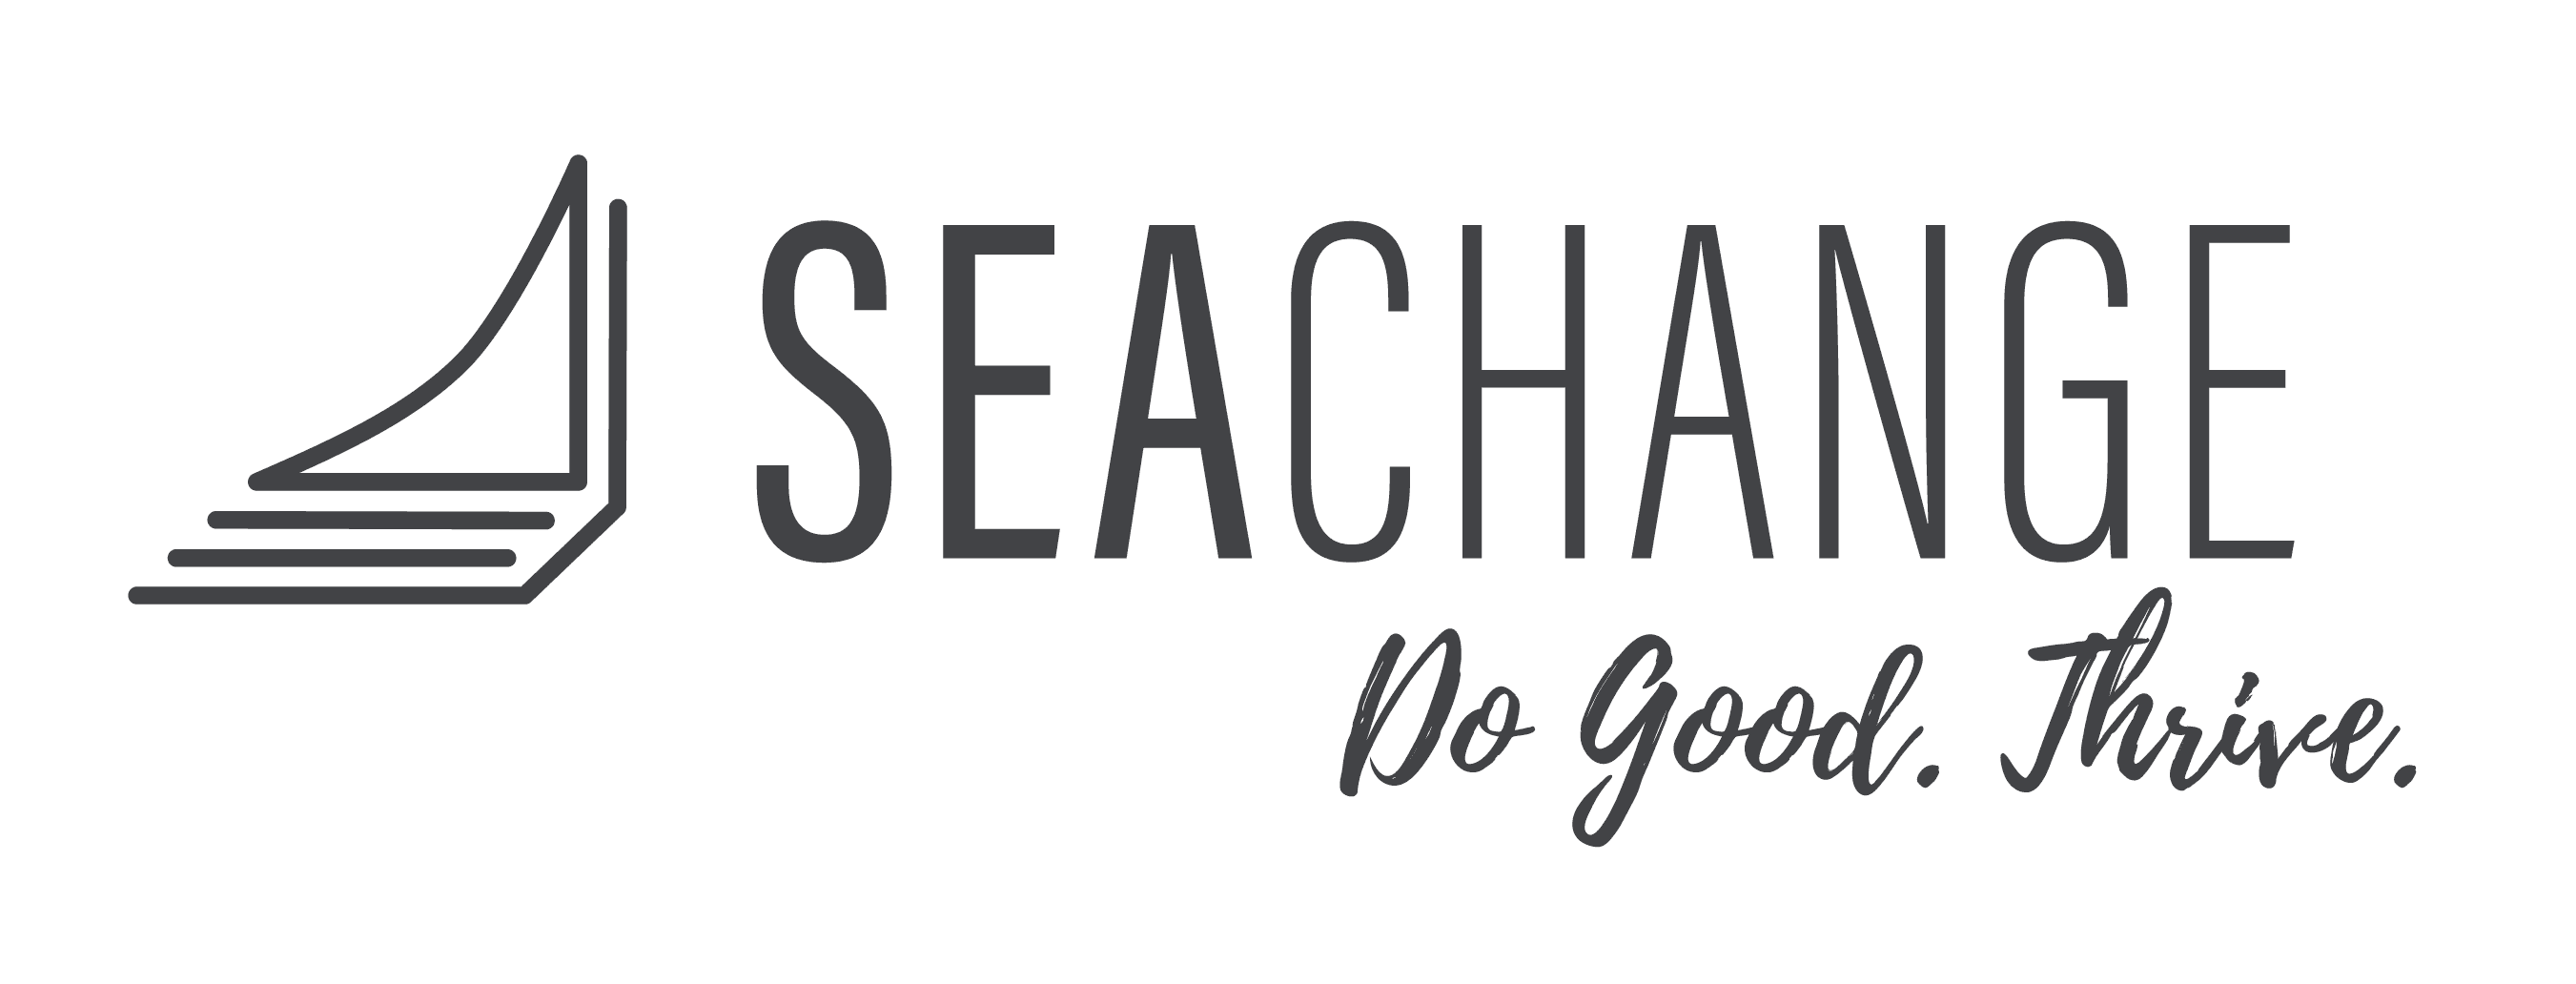 Seachange LTD